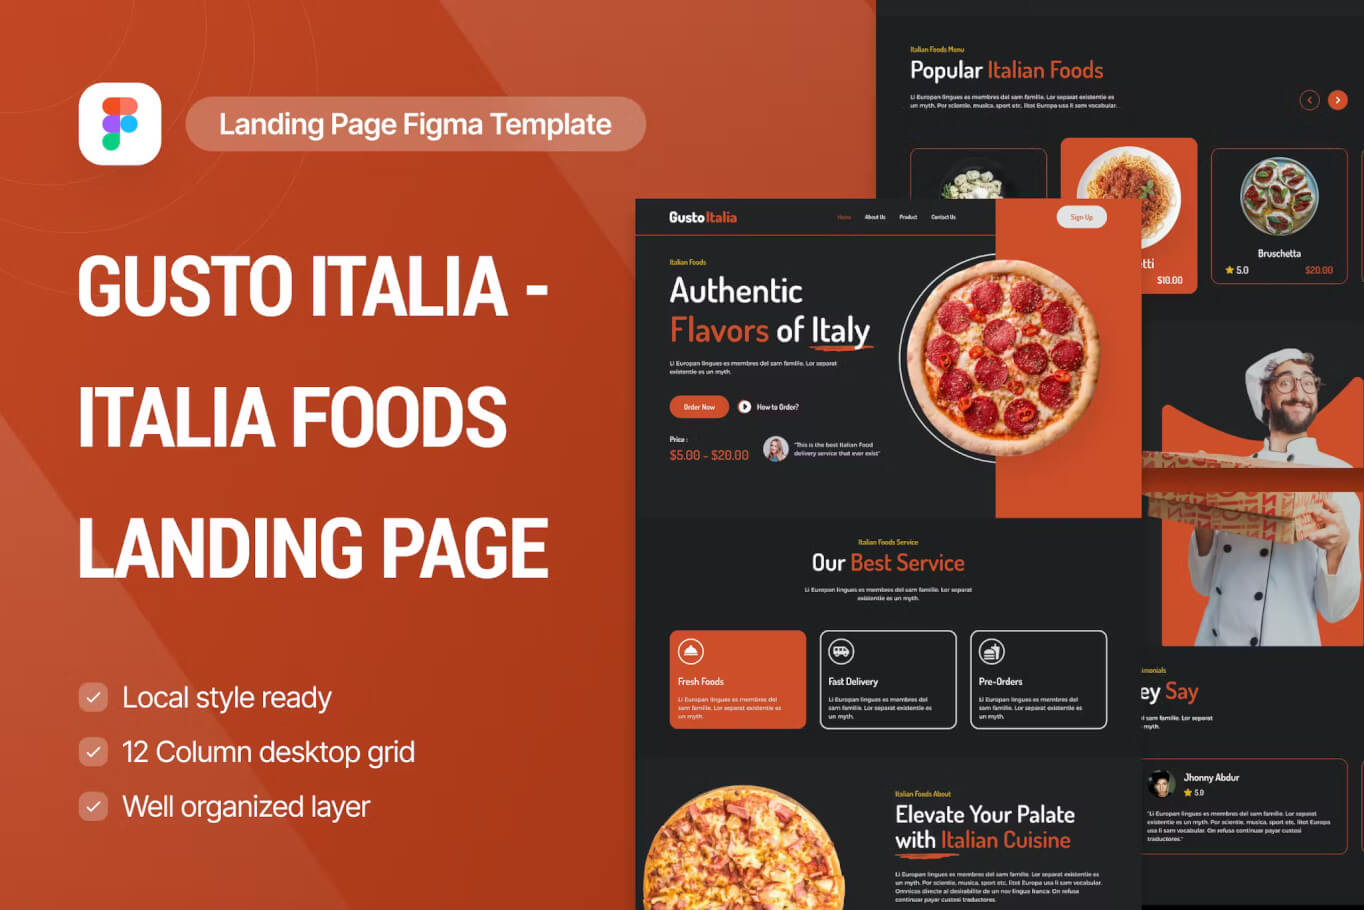 Gusto Italia - 意大利食品登陆页面